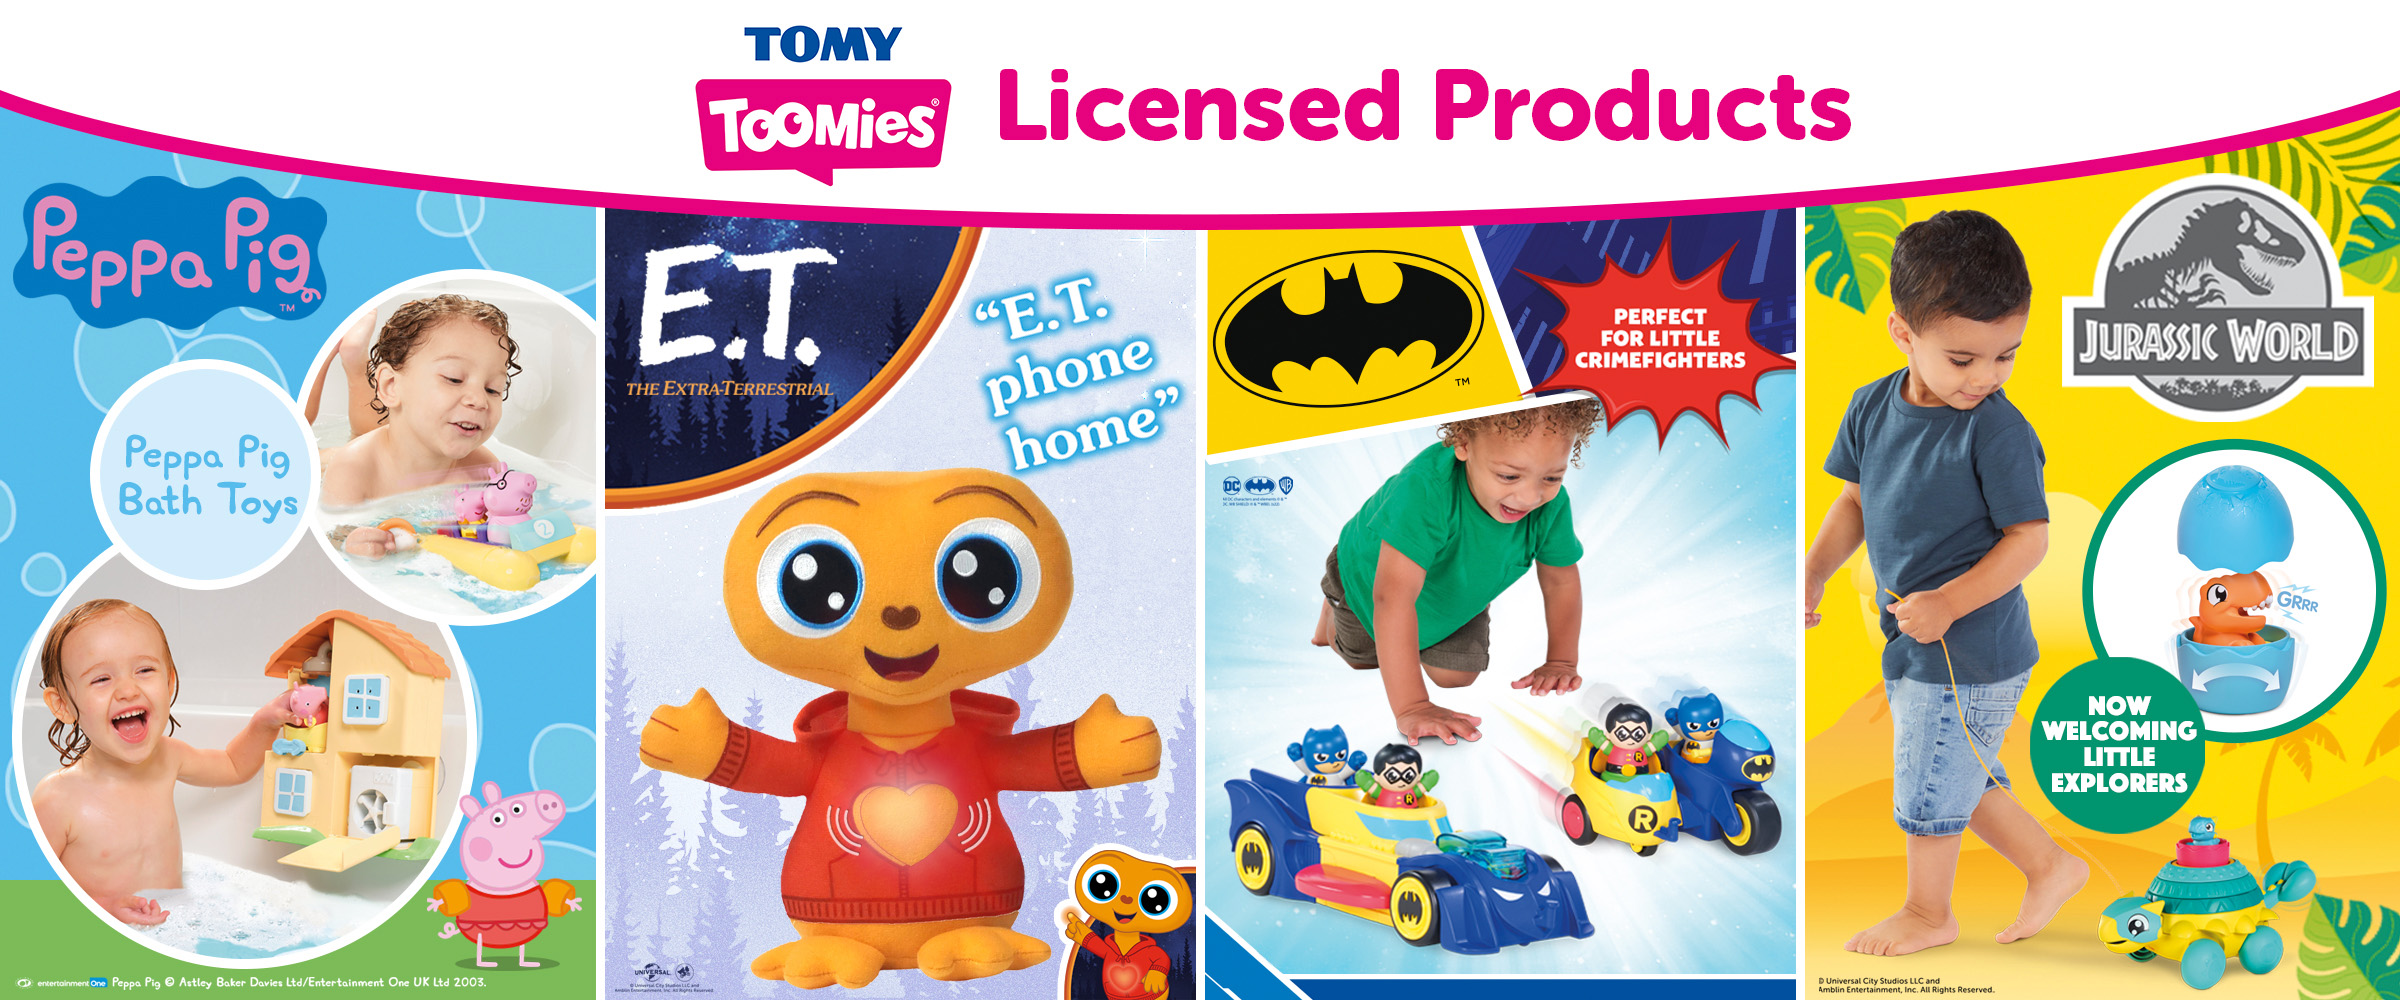 Toomies Licensed Products